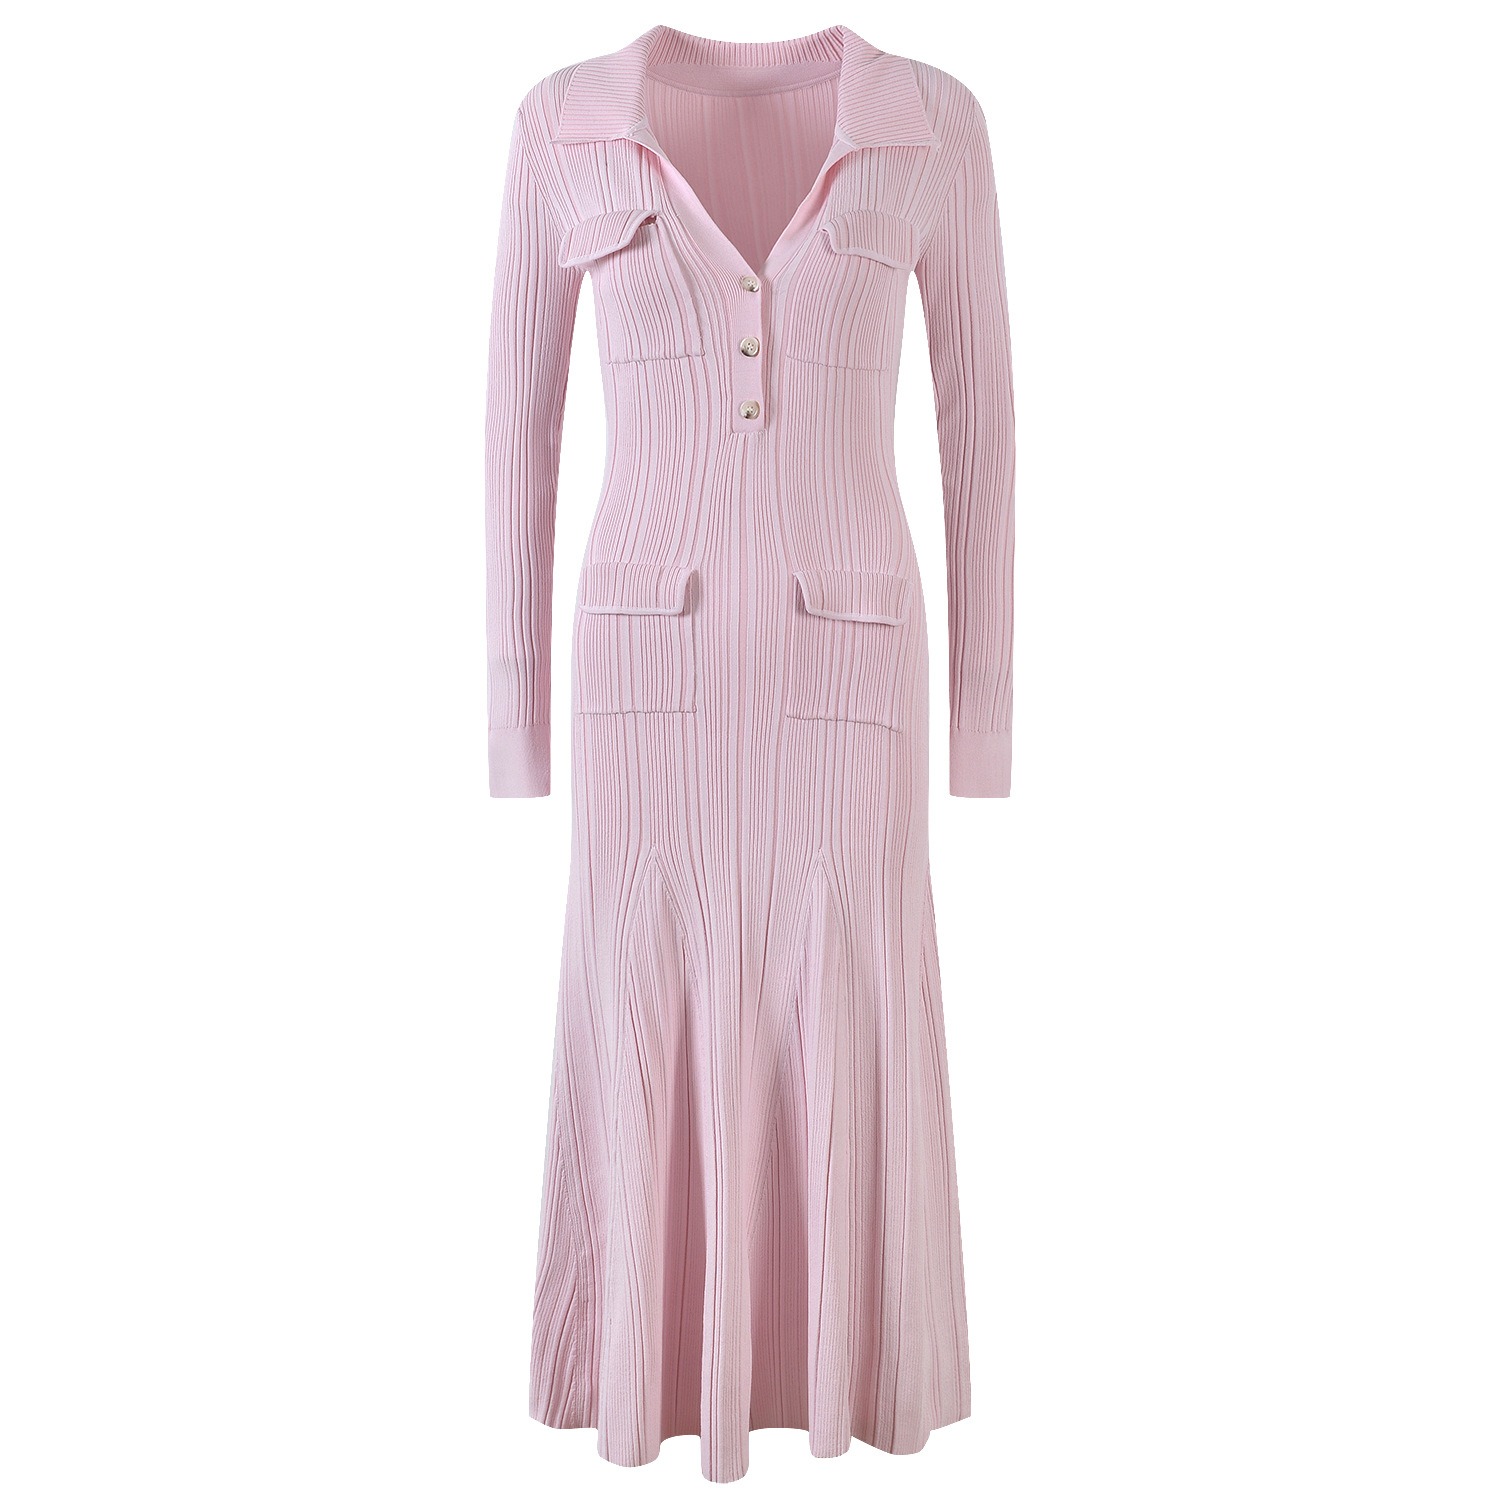 Women's pink knitted medium-length dress senior sense of fashion temperament polo collar waist-skimming long dress